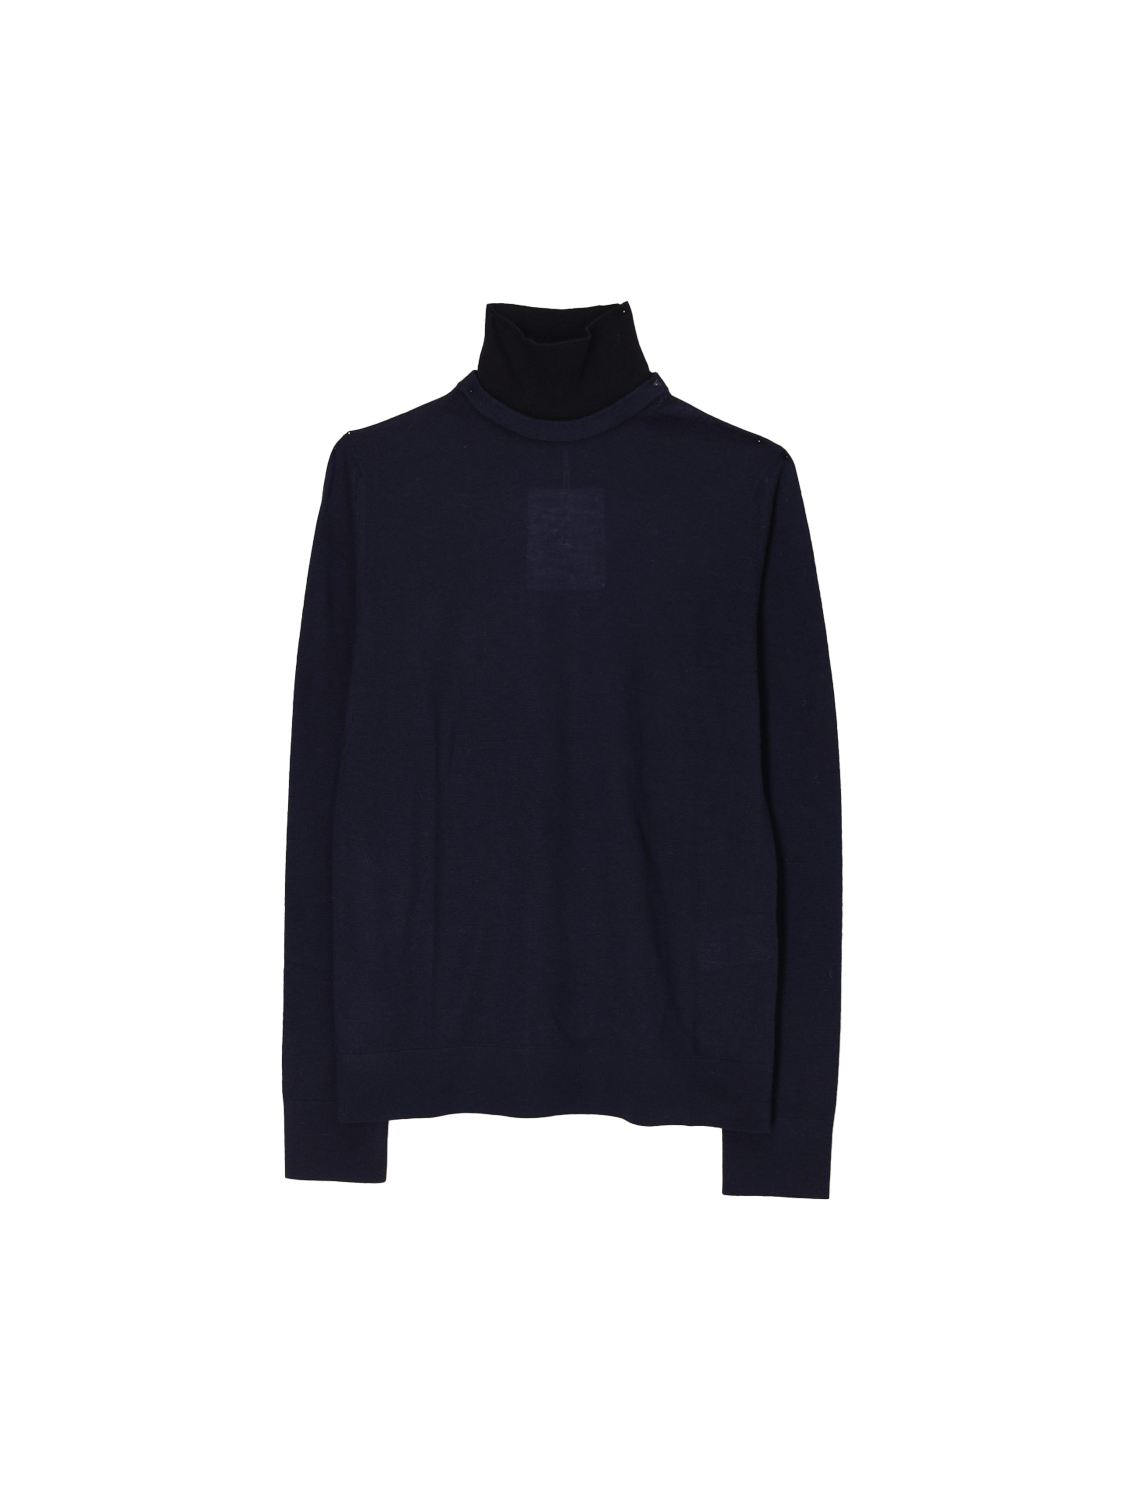 Marina - Cashmere turtleneck sweater  